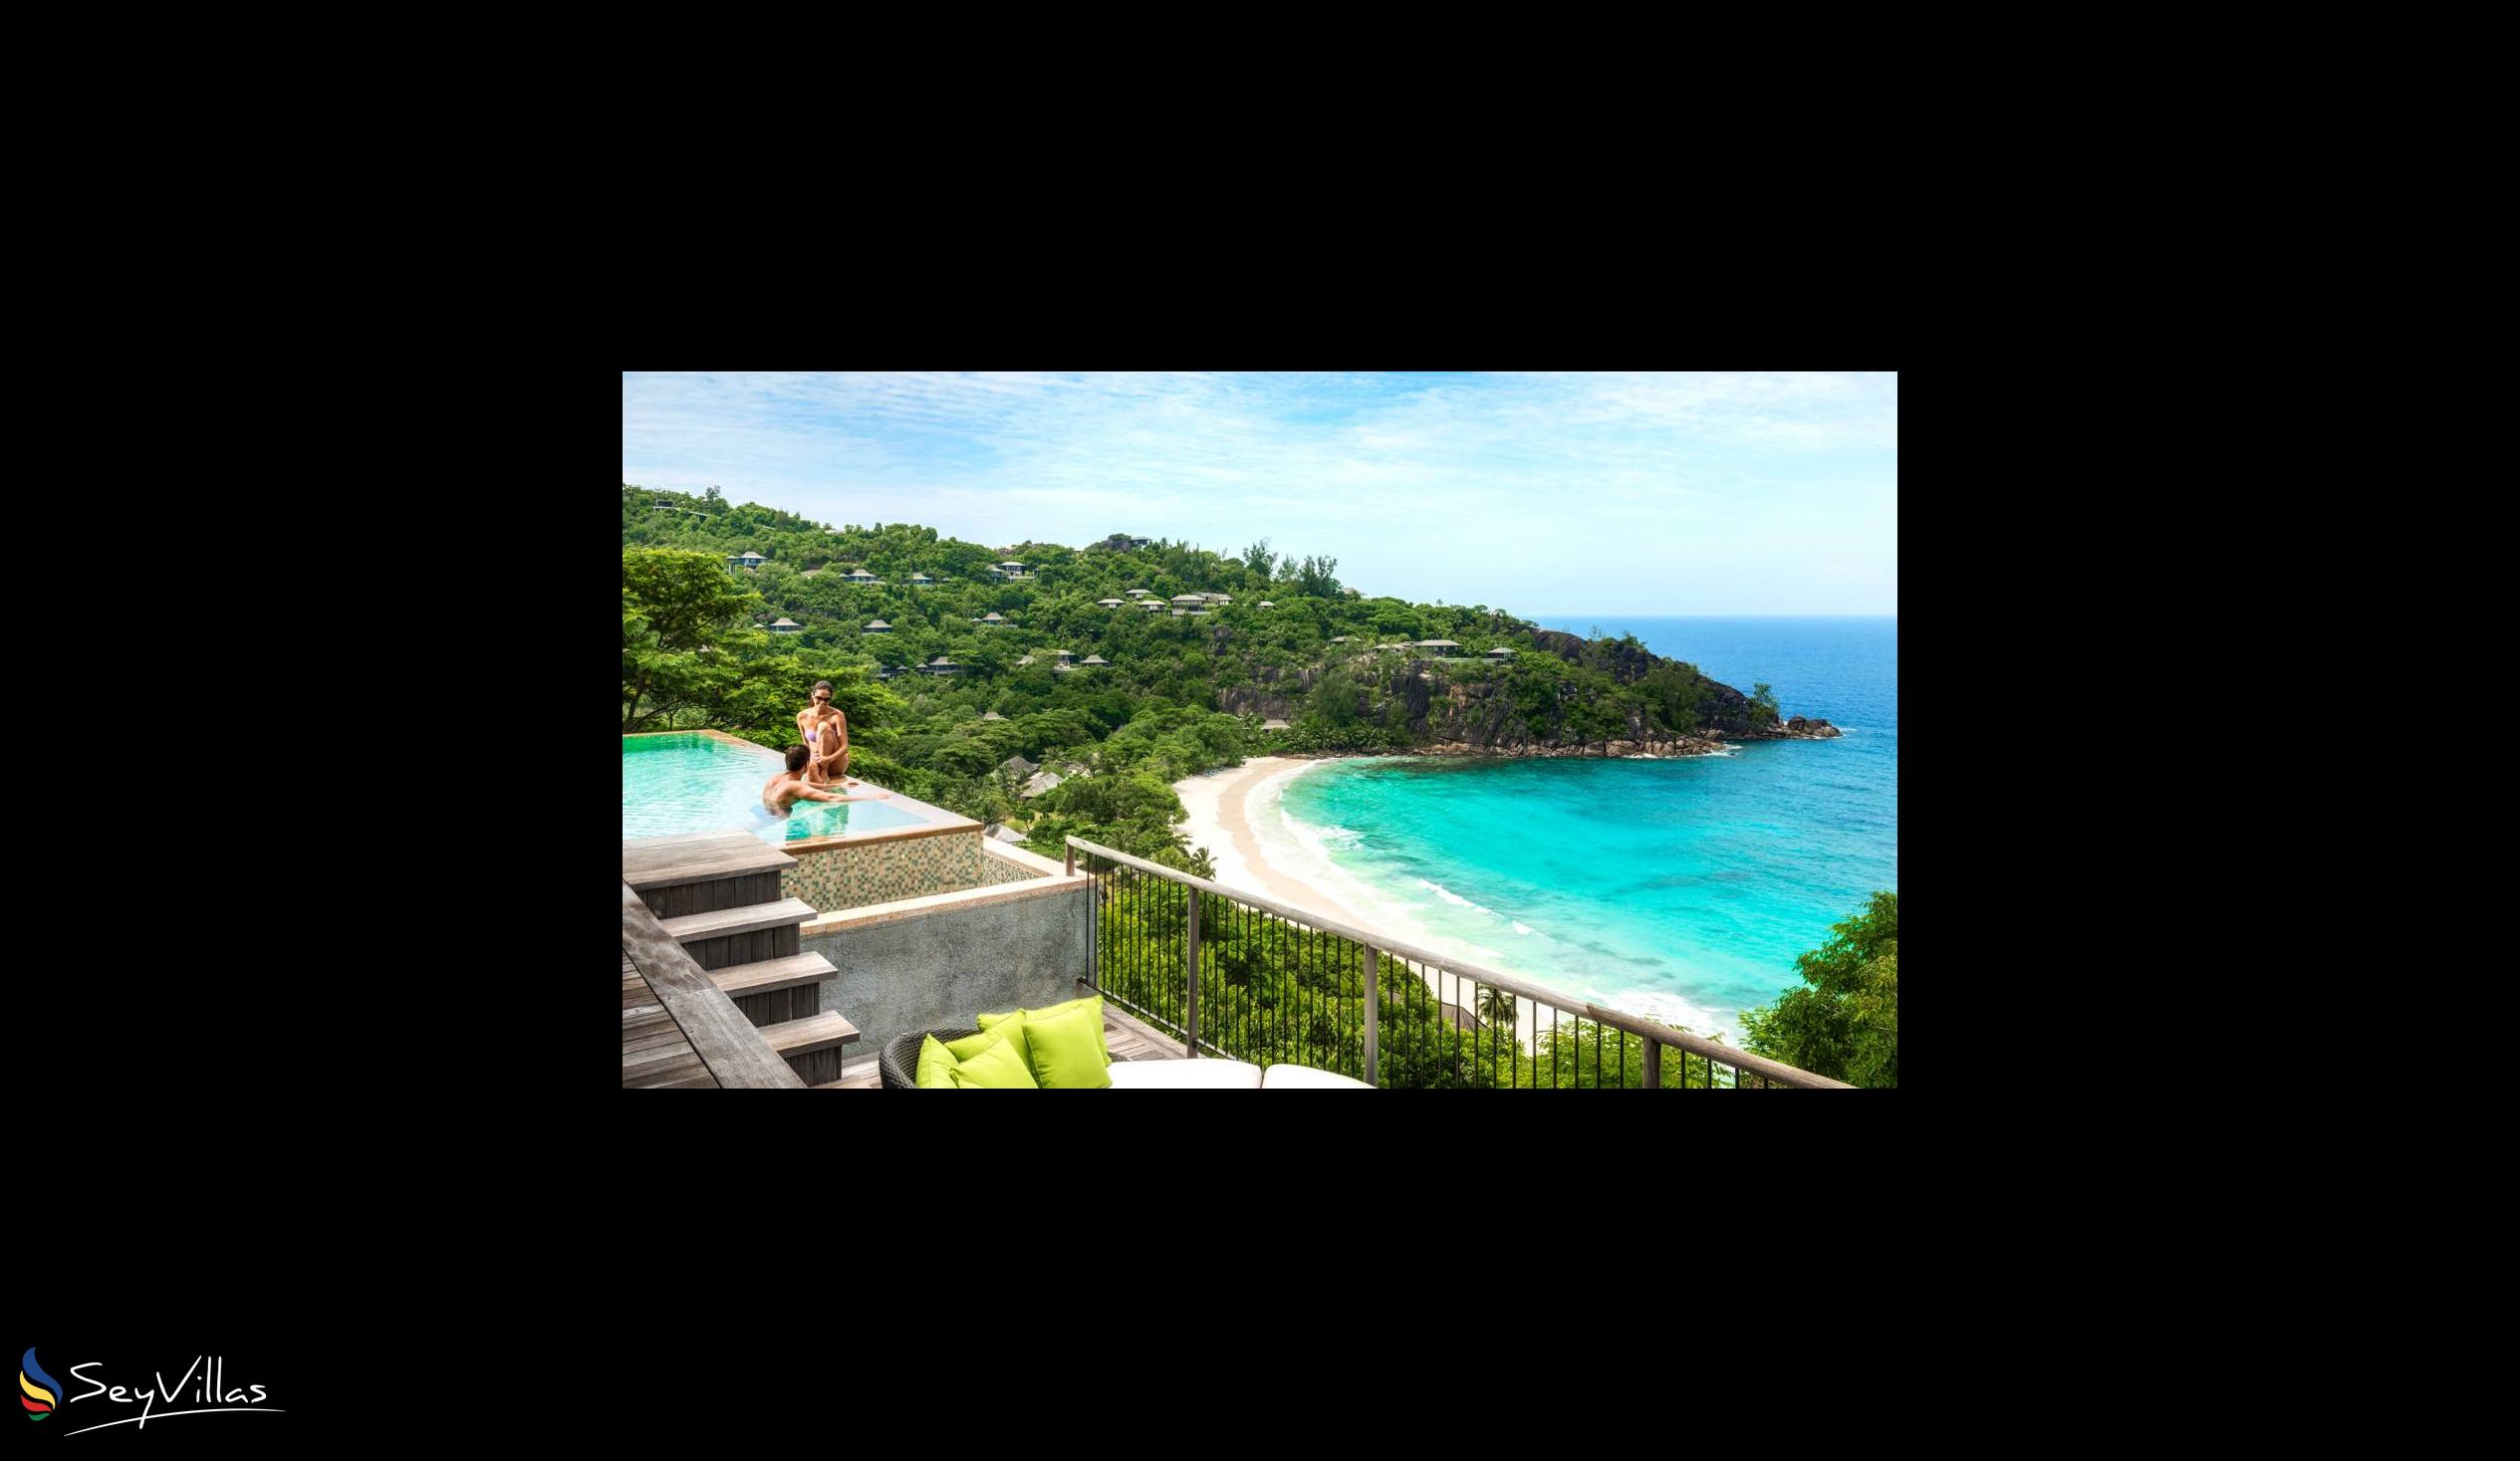 Photo 55: Four Seasons Resort - Serenity Villa - Mahé (Seychelles)